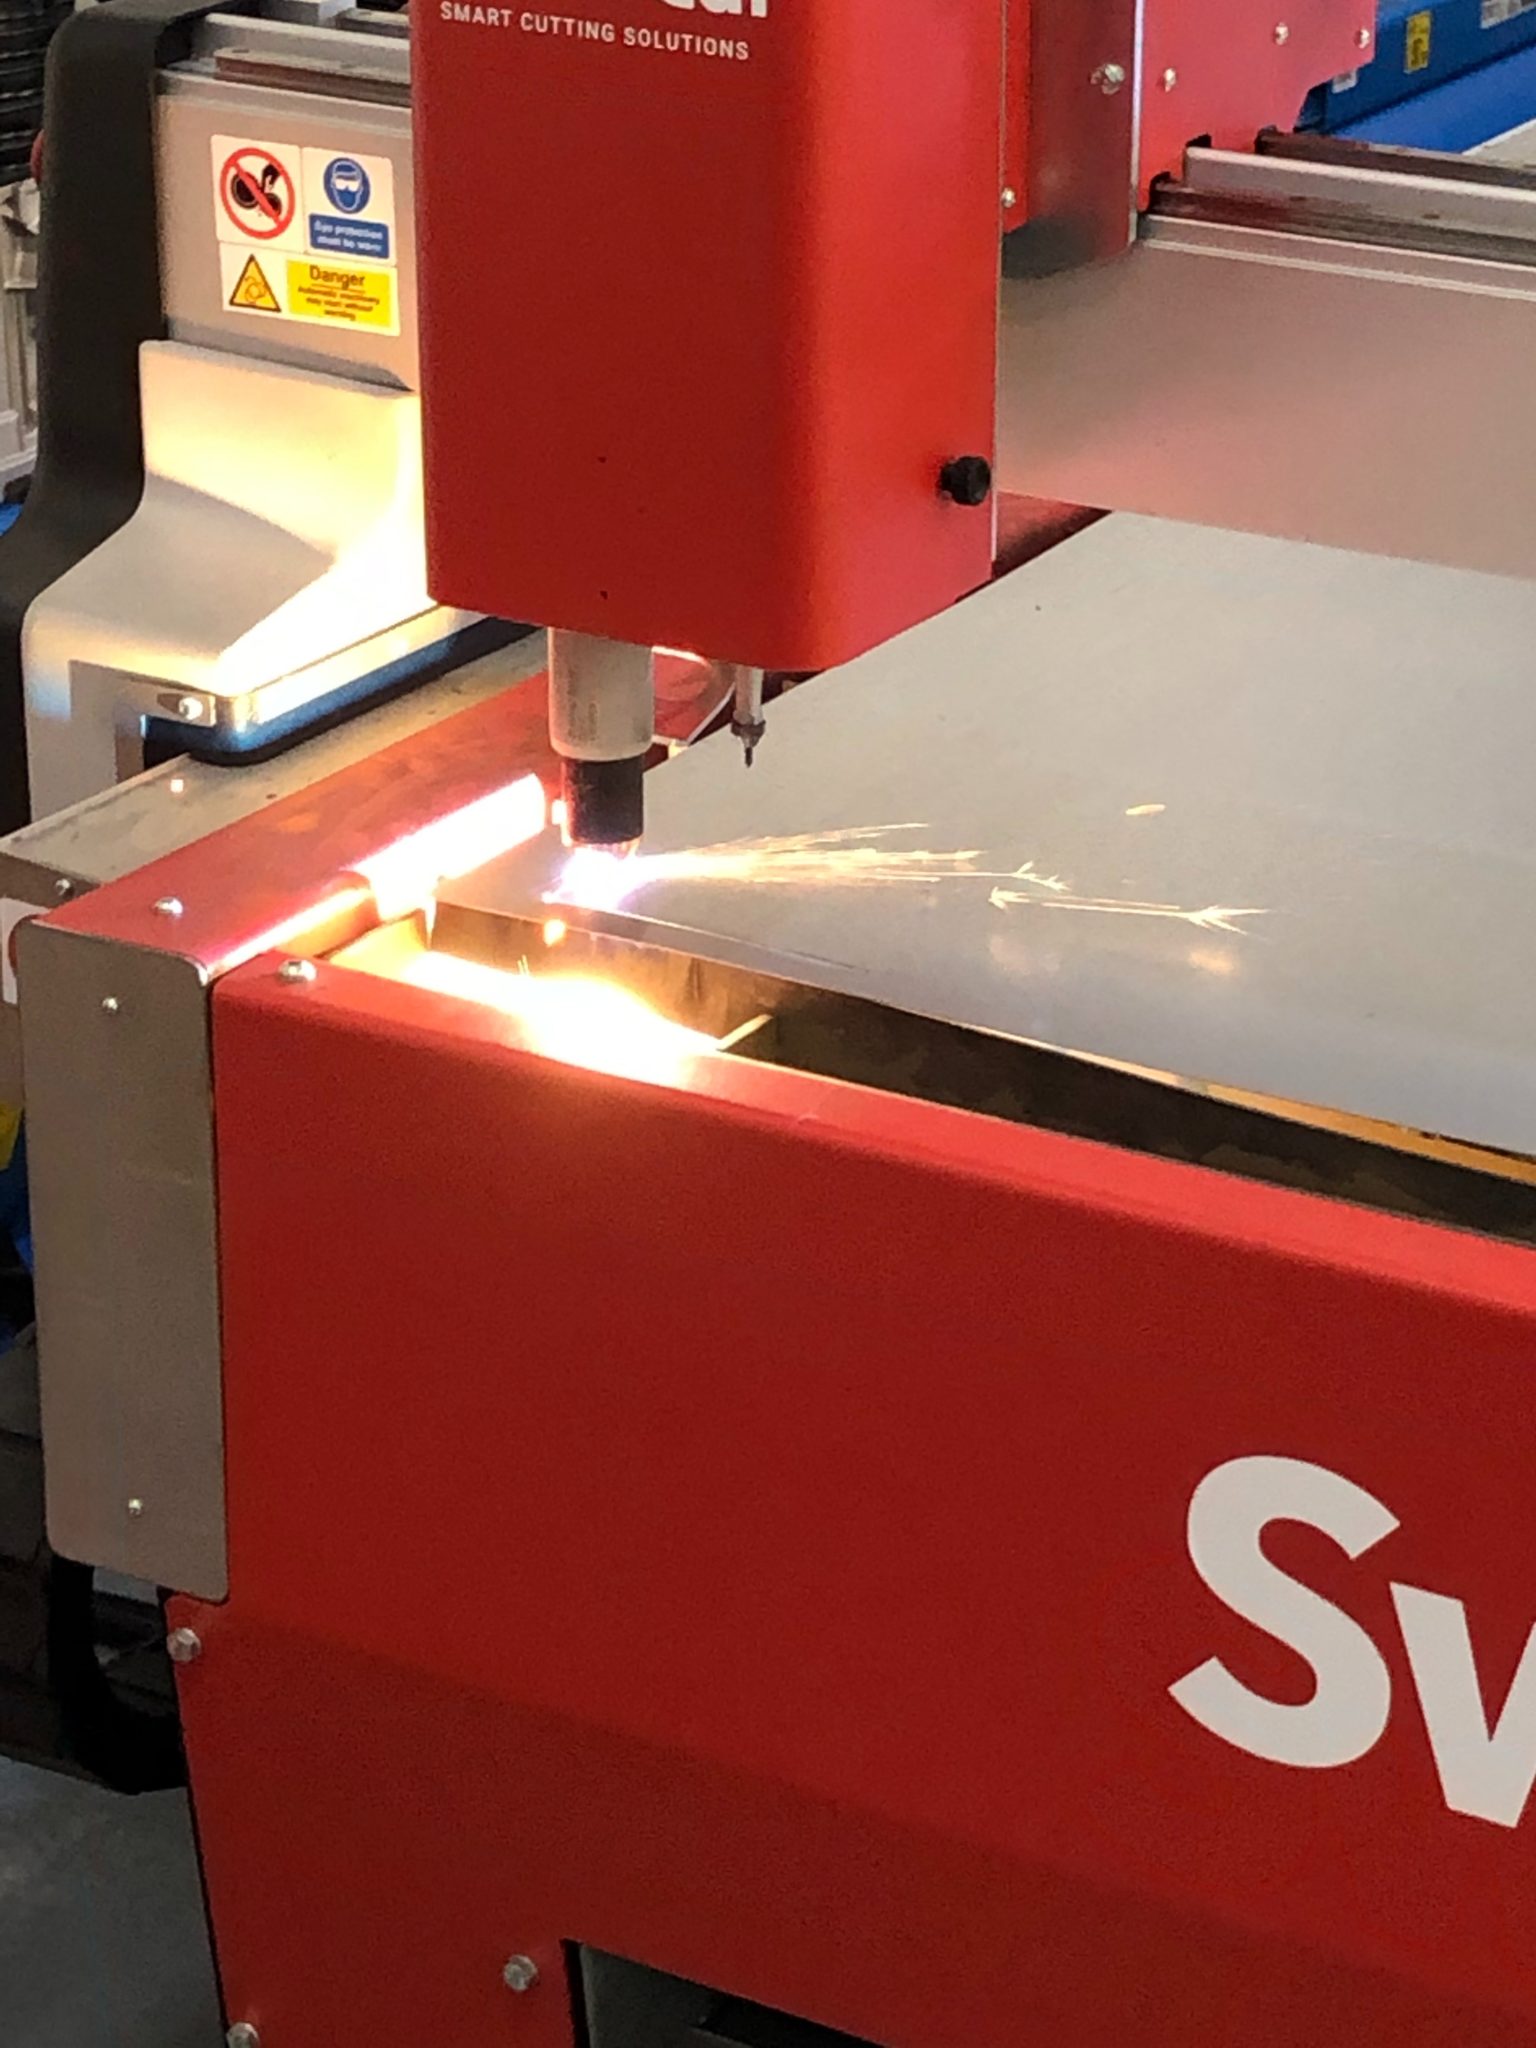 Eagle Fabrications Swift Cutter Swift-Cut Pro Tafel snijden metaalplaat